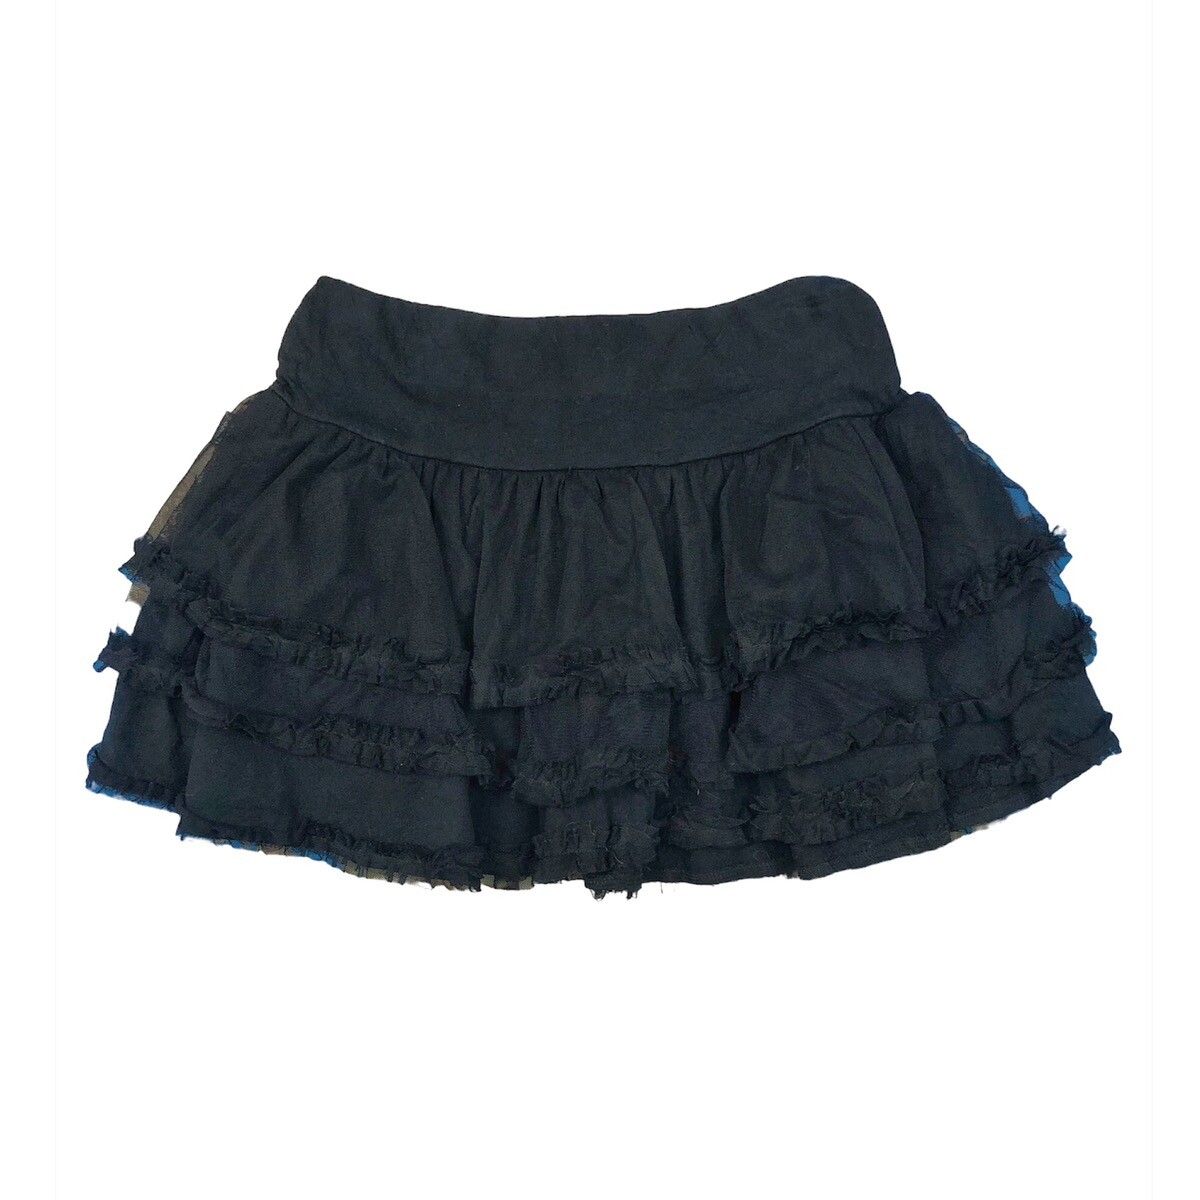 Japanese Brand - Superlovers Mini Skirt - 1